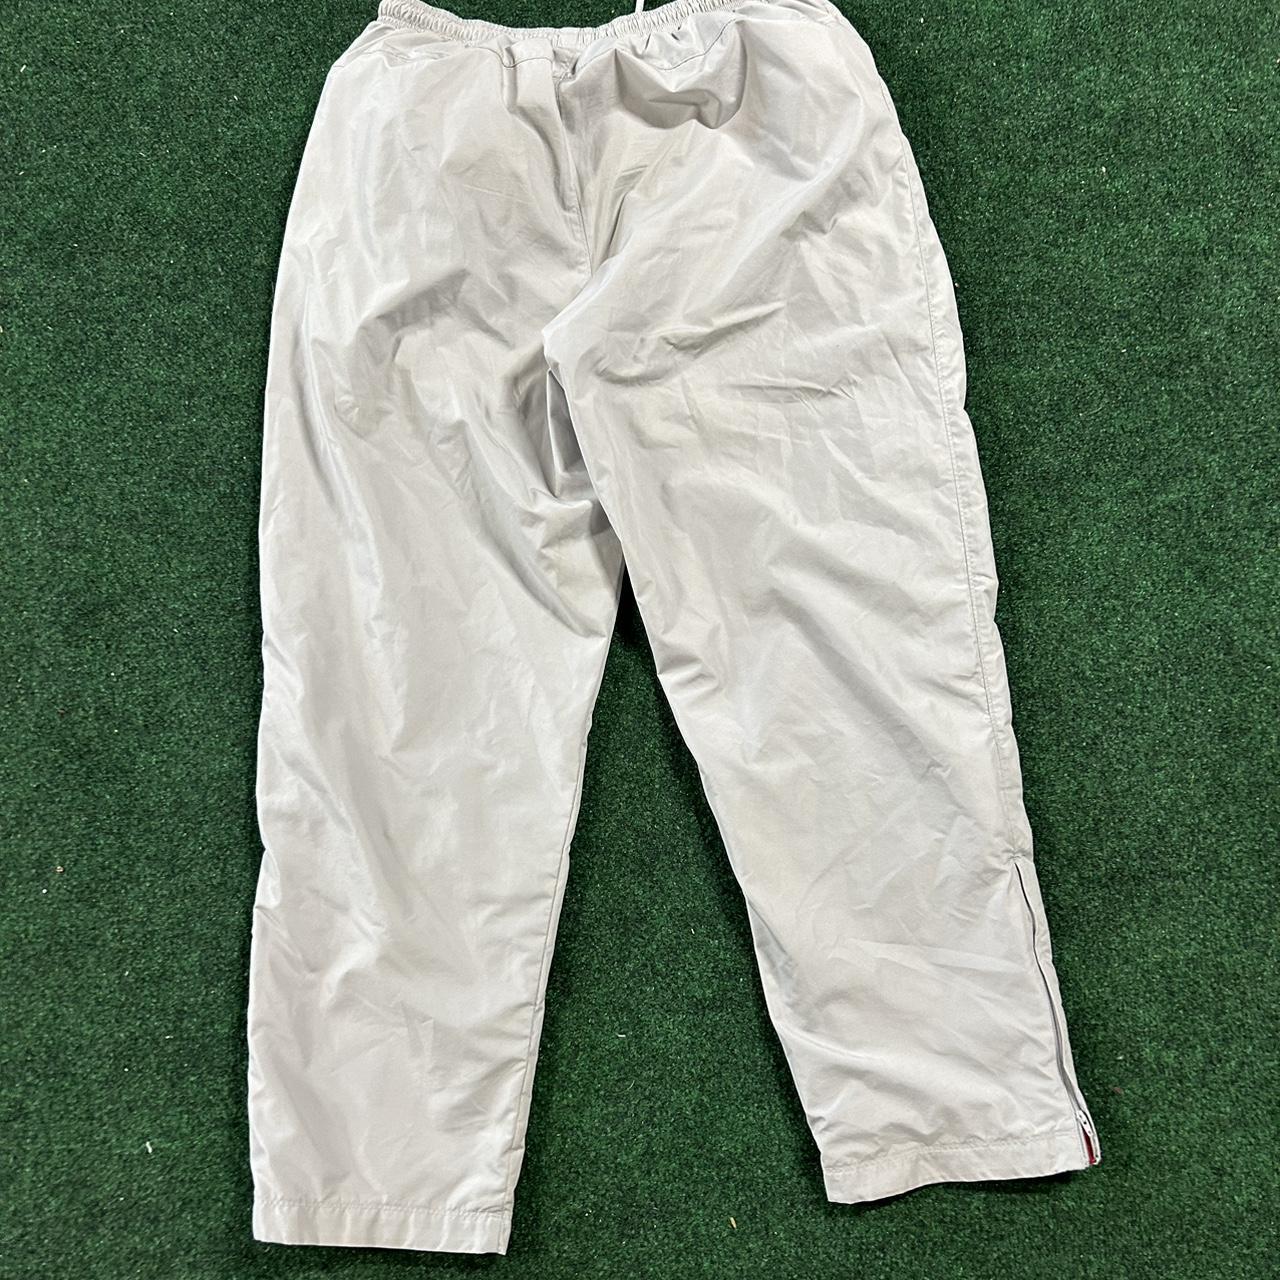 Grey Nike Lined Sweatpants - Size XL - Very warm,... - Depop